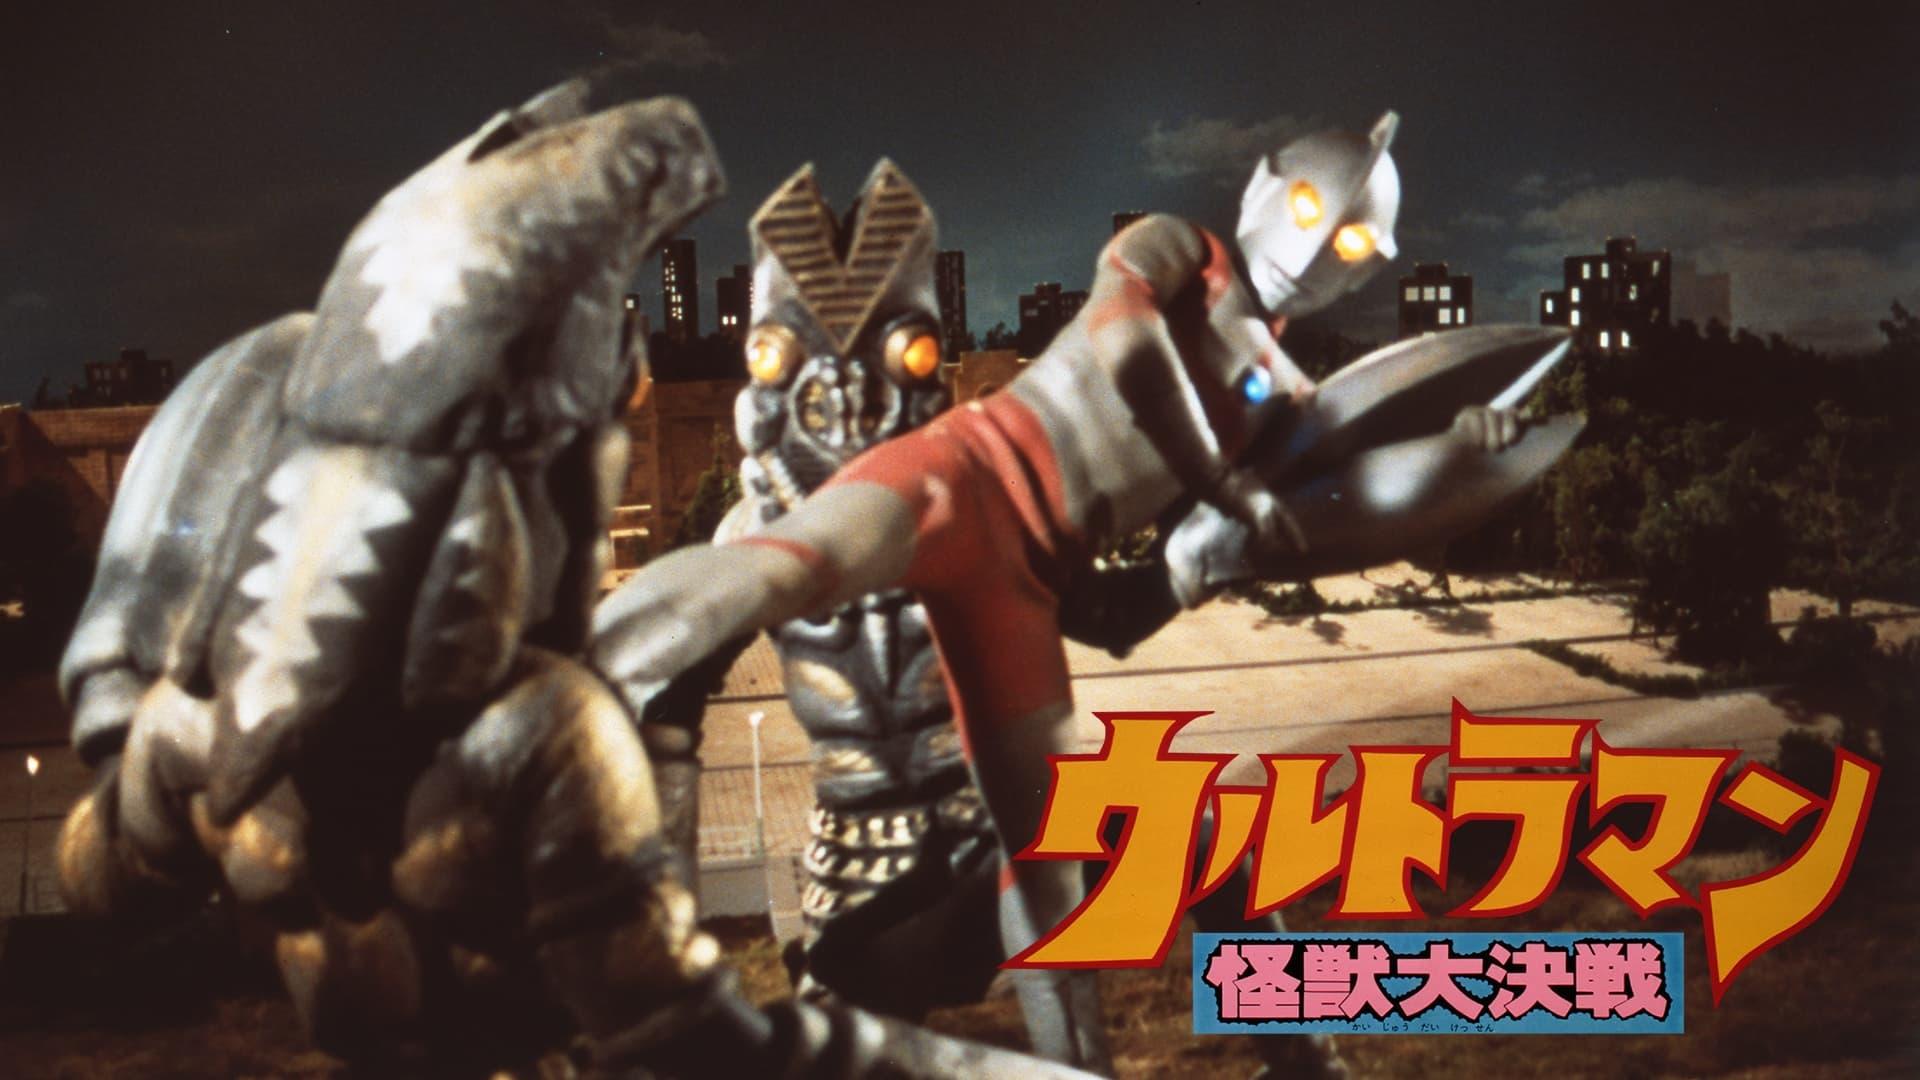 Ultraman: Great Monster Decisive Battle backdrop